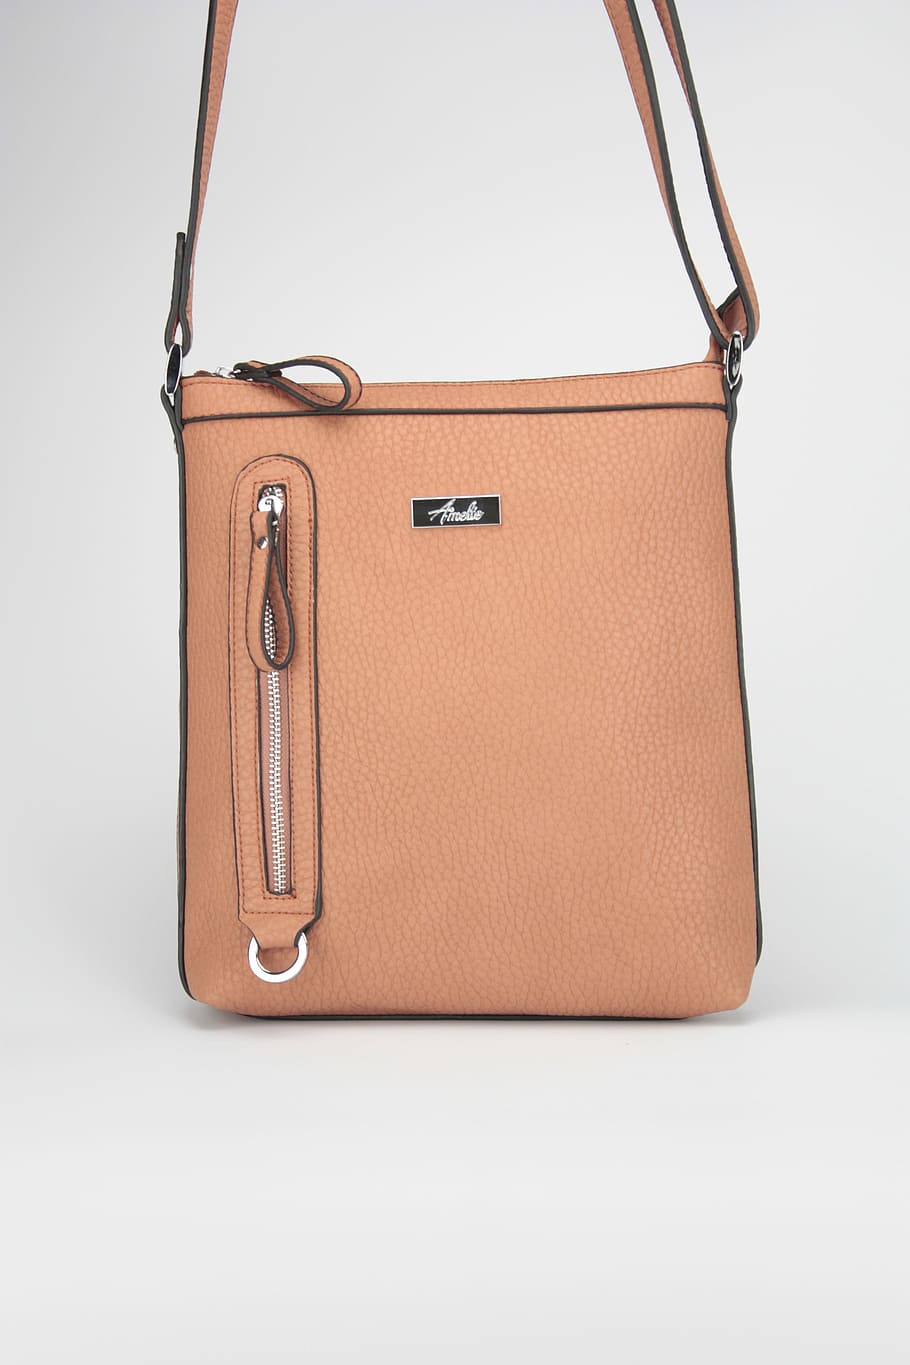 Bag, Fashion, Style, suitcase, luggage, travel, white background, studio shot, single object, brown